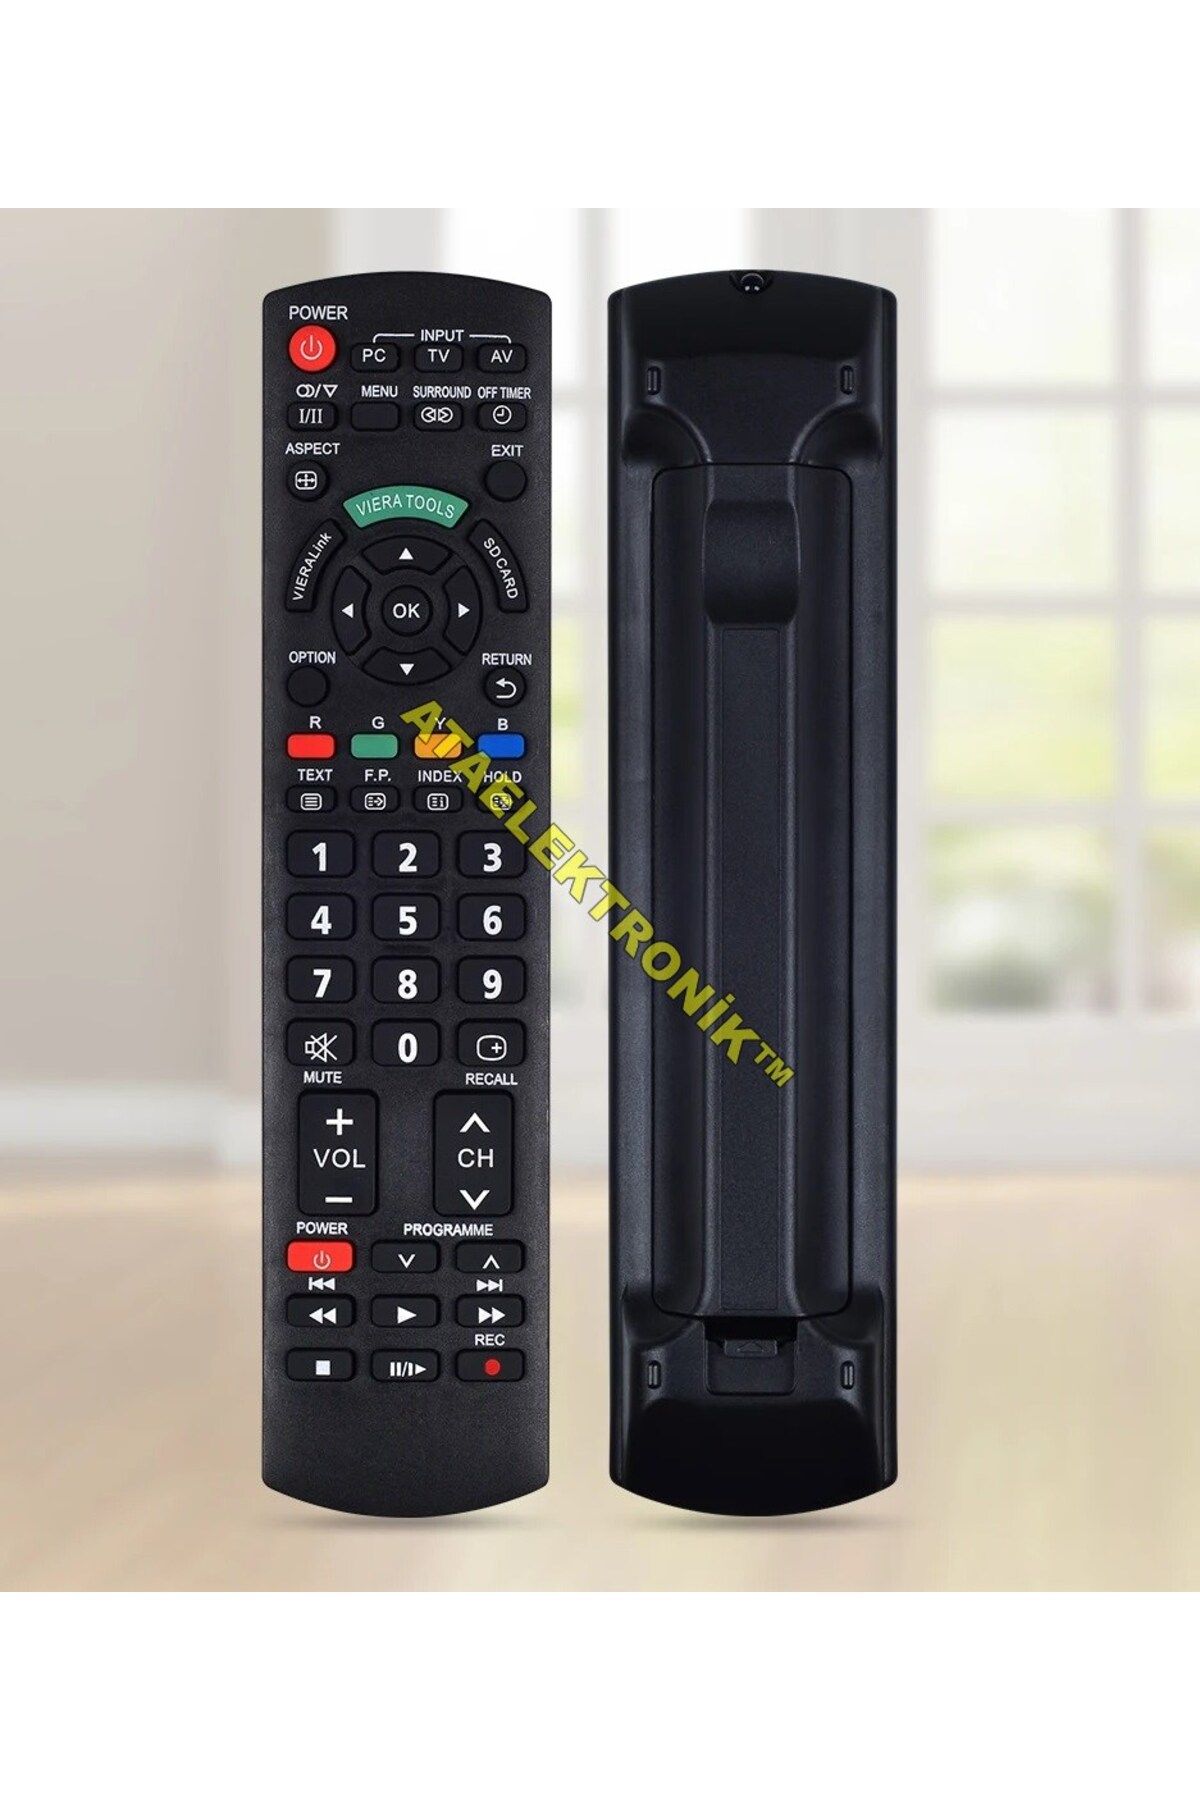 ATAELEKTRONİK Panasonic Viera TV kumanda Universal evrensel plazma lcd led tv HDTV